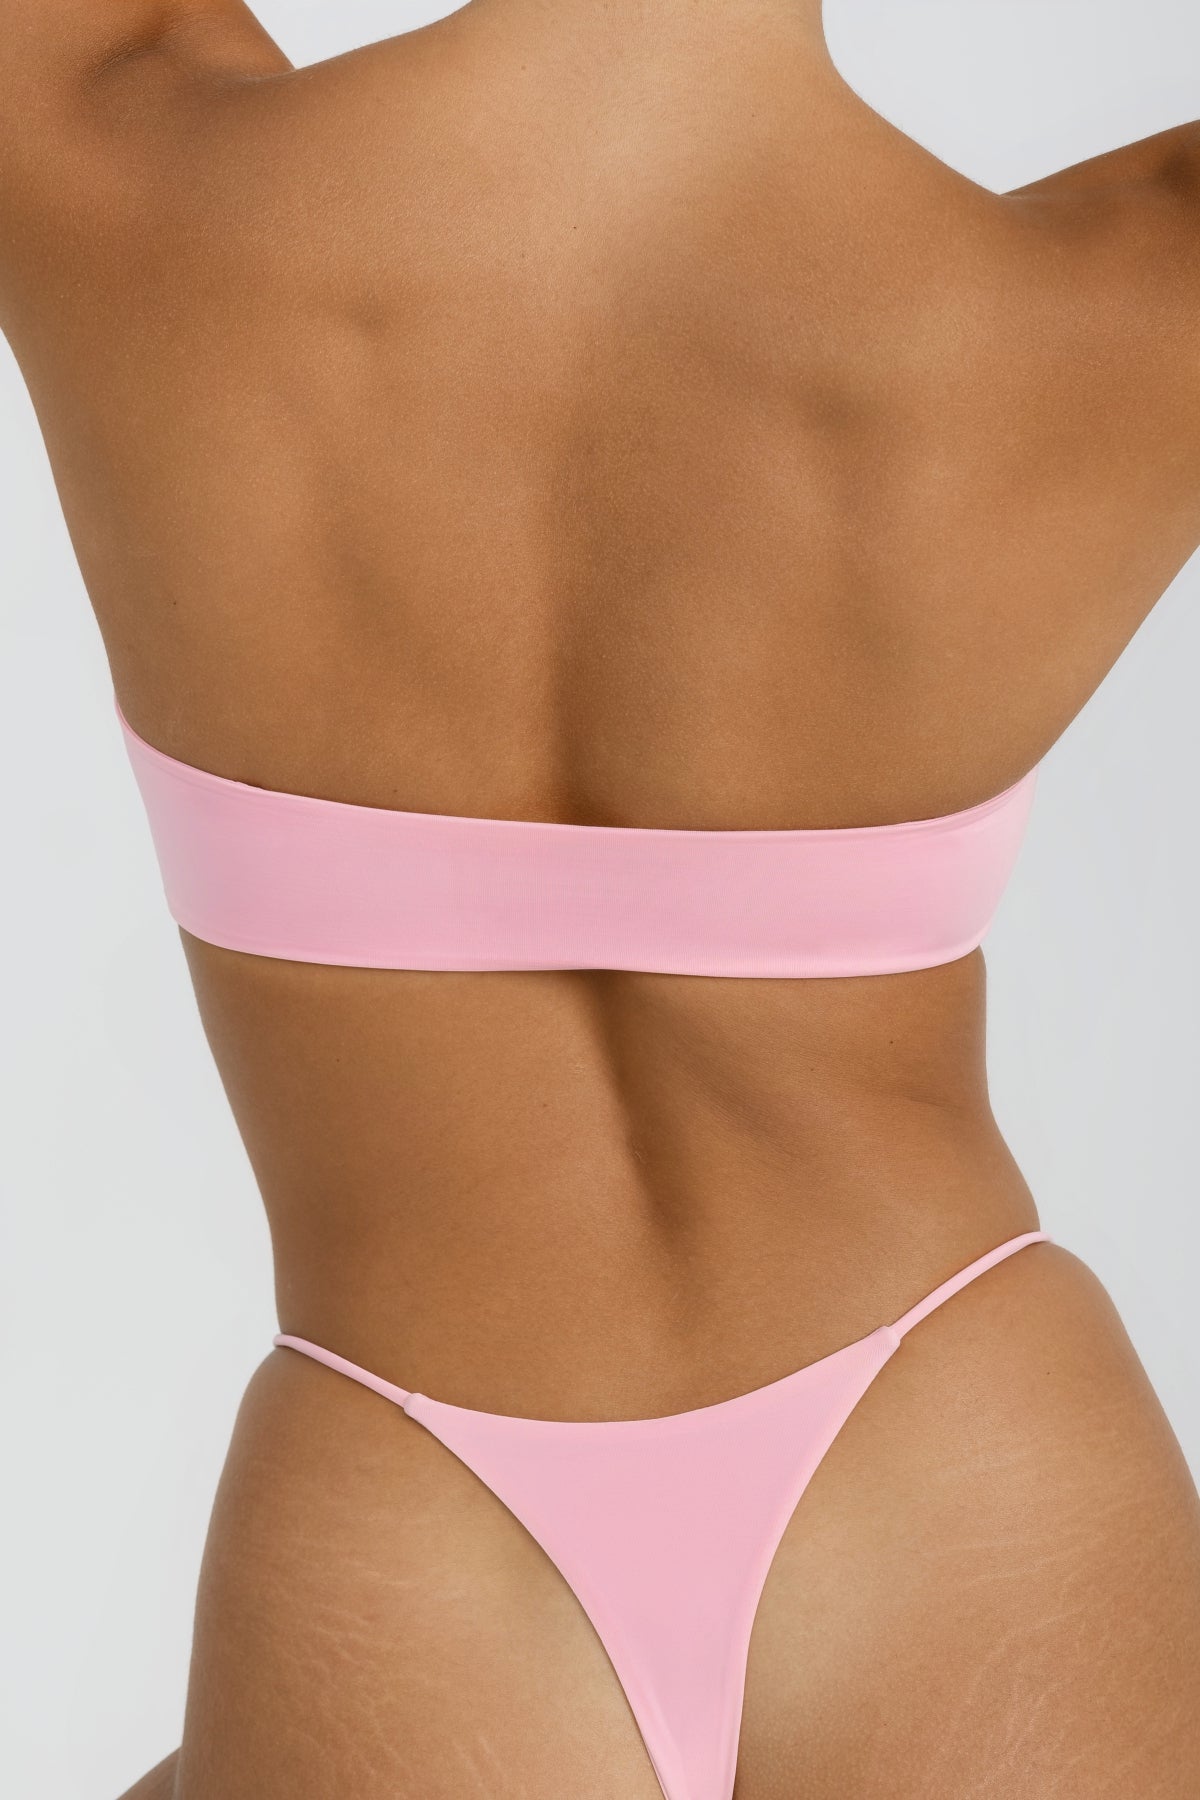 Blush Pink Bandeau Bikini Top with removable straps